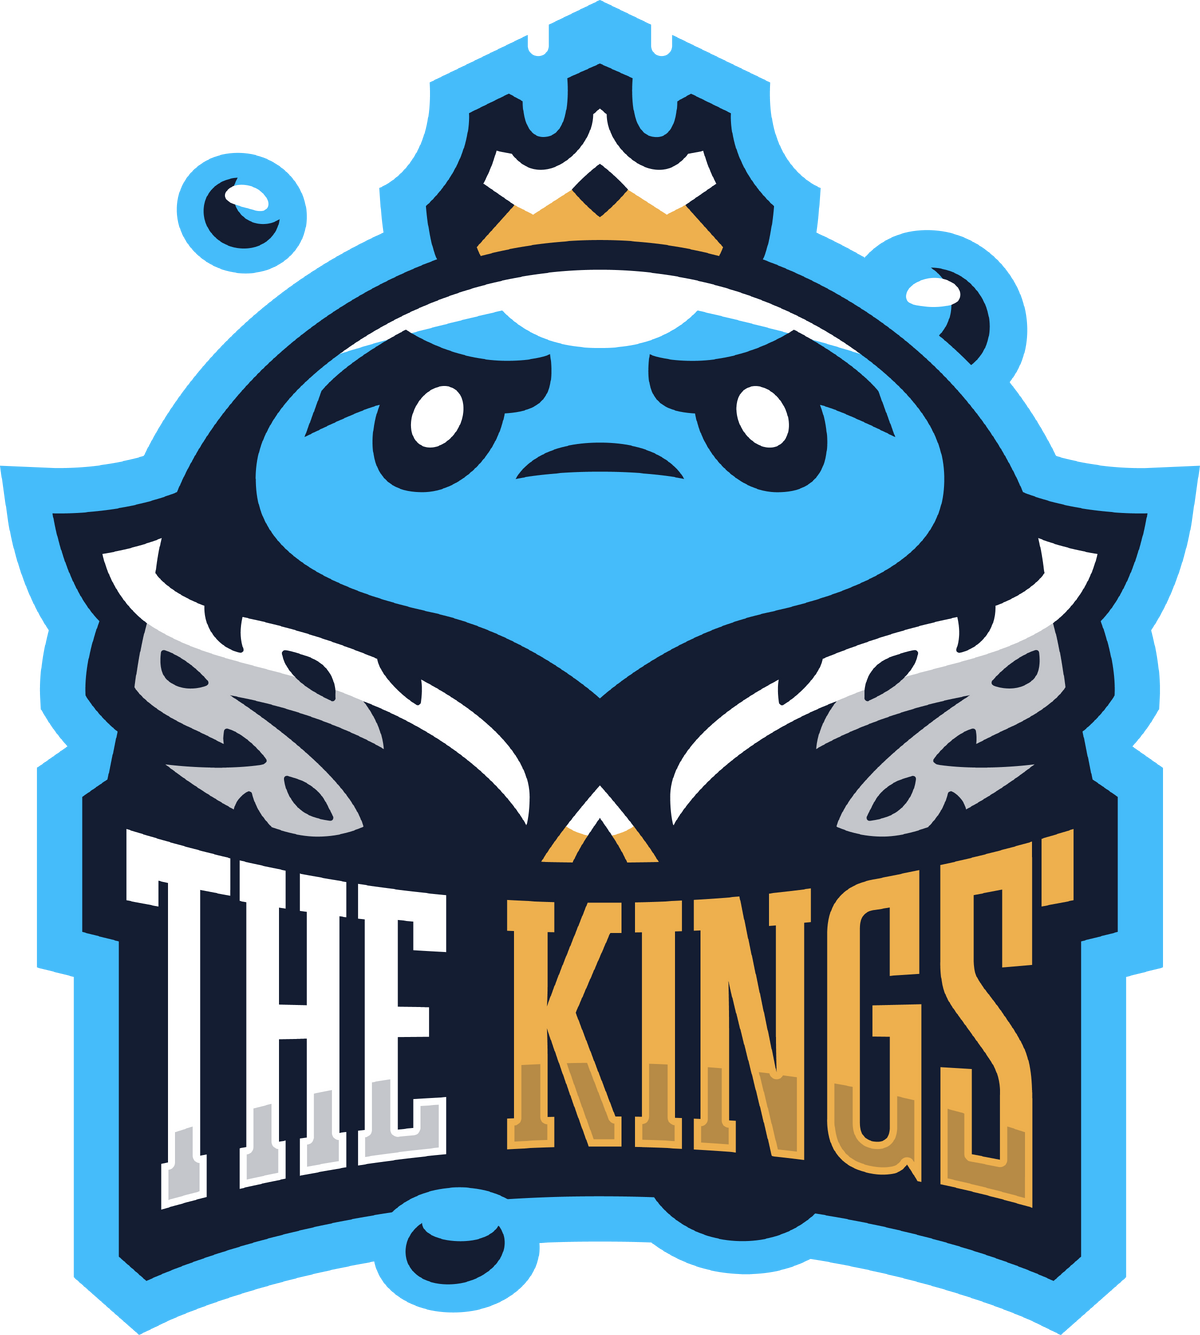 Kings League - Wikipedia